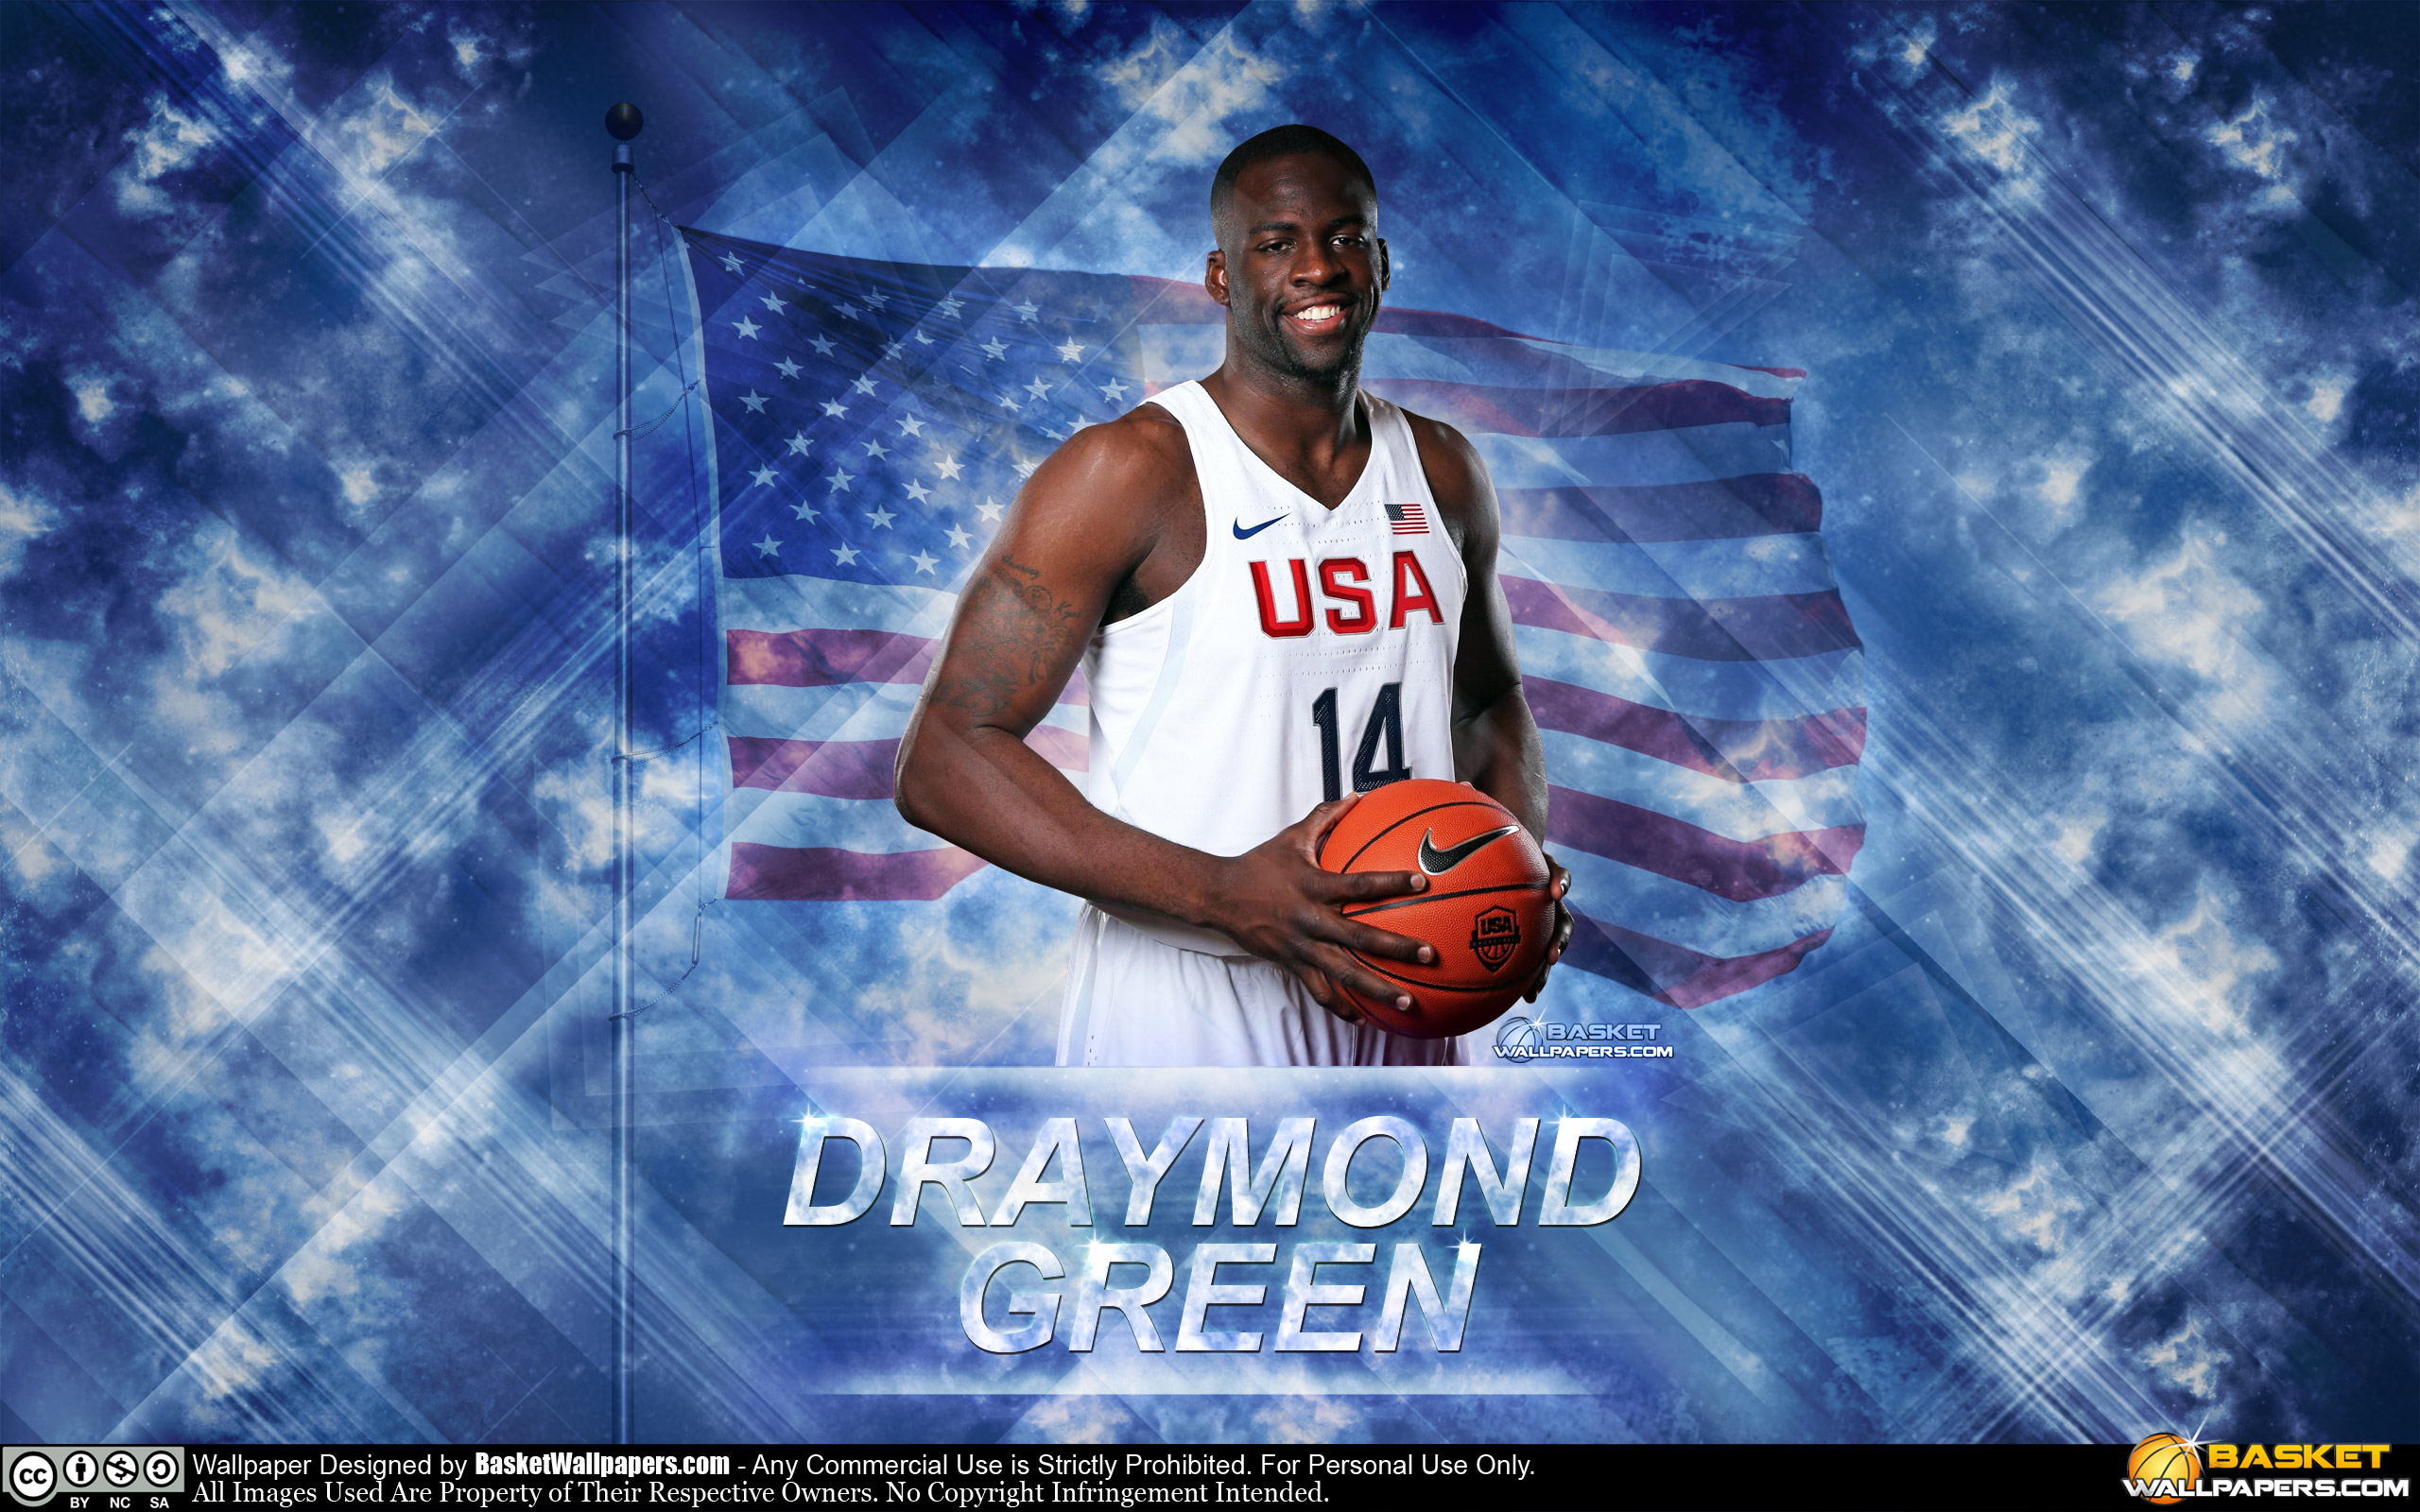 Draymond Green USA 2016 Olympics Wallpaper